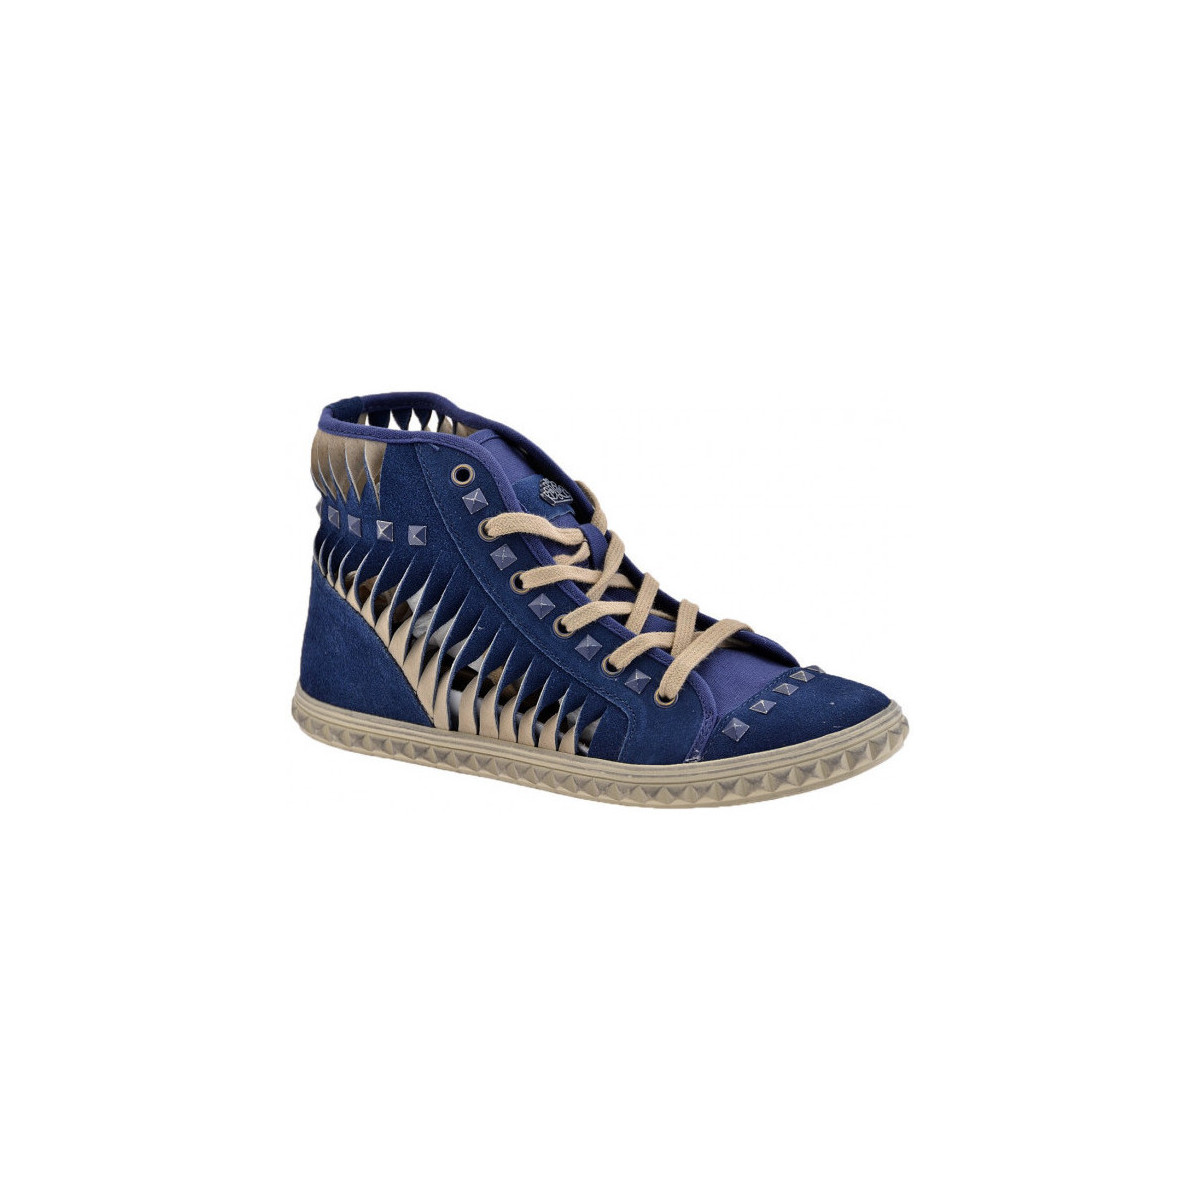 Sapatos Mulher Sapatilhas Fornarina Sneaker  Mid  Bulloni Azul